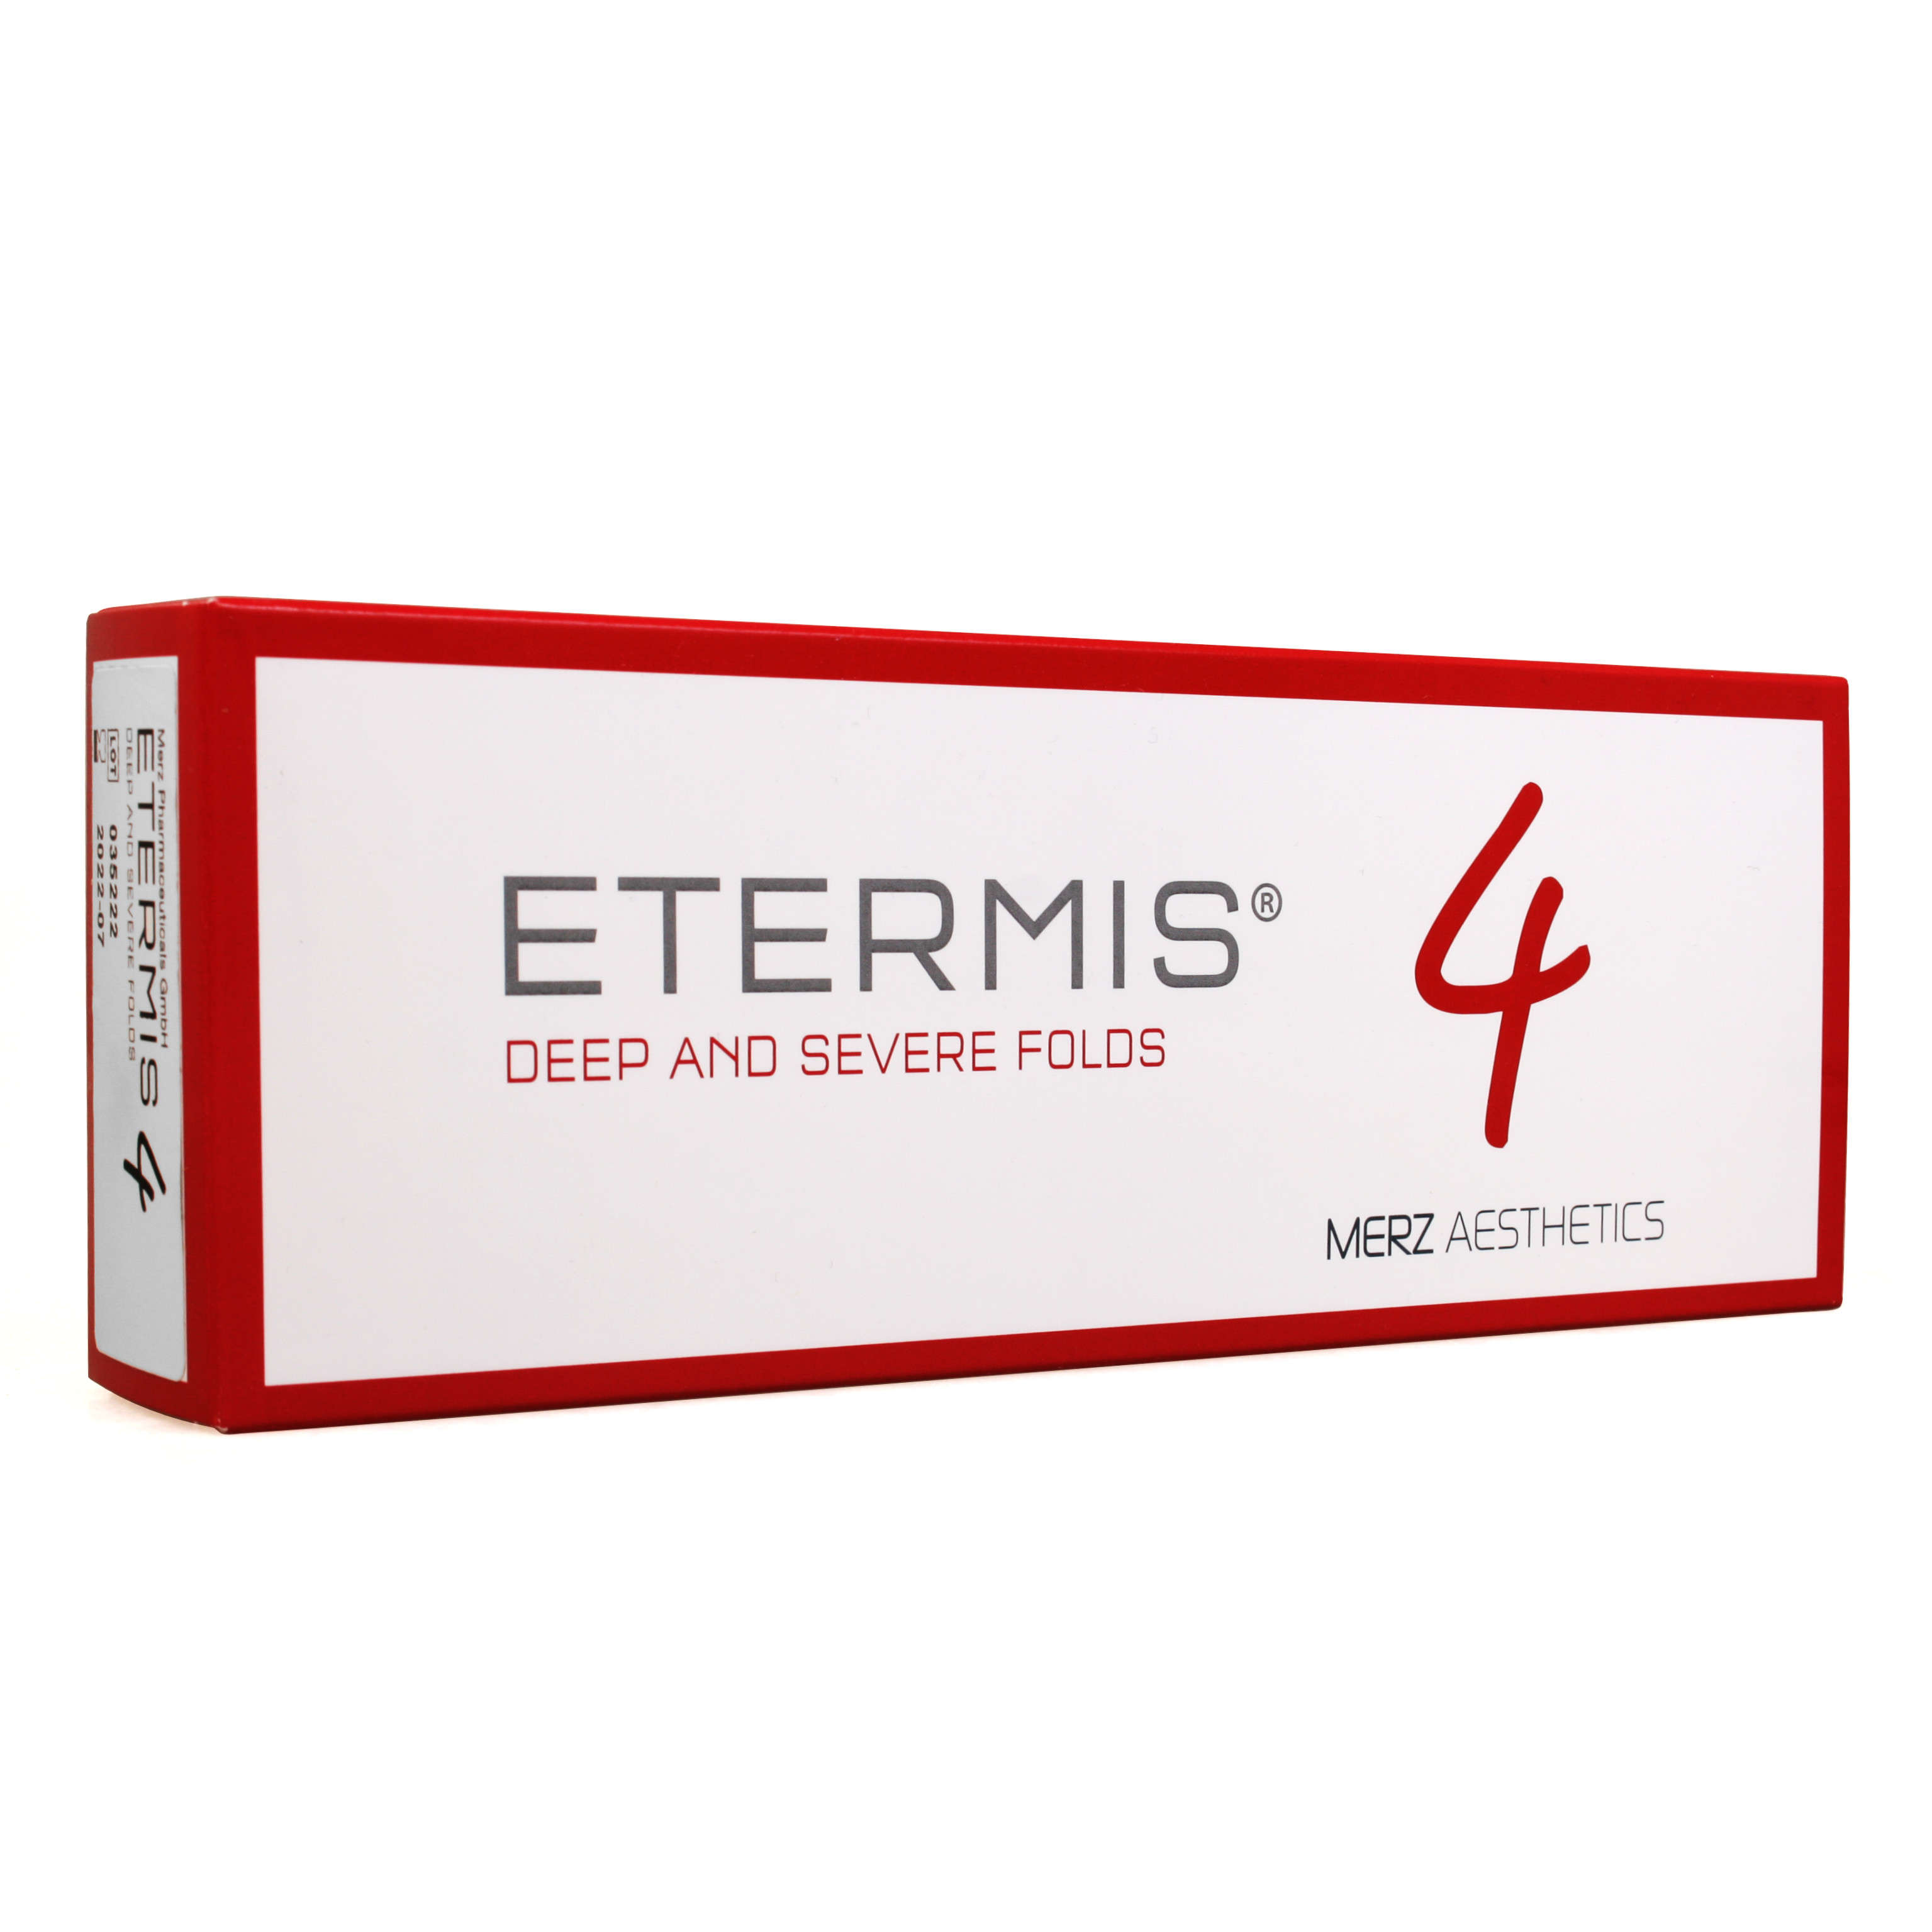 Merz - Etermis 4